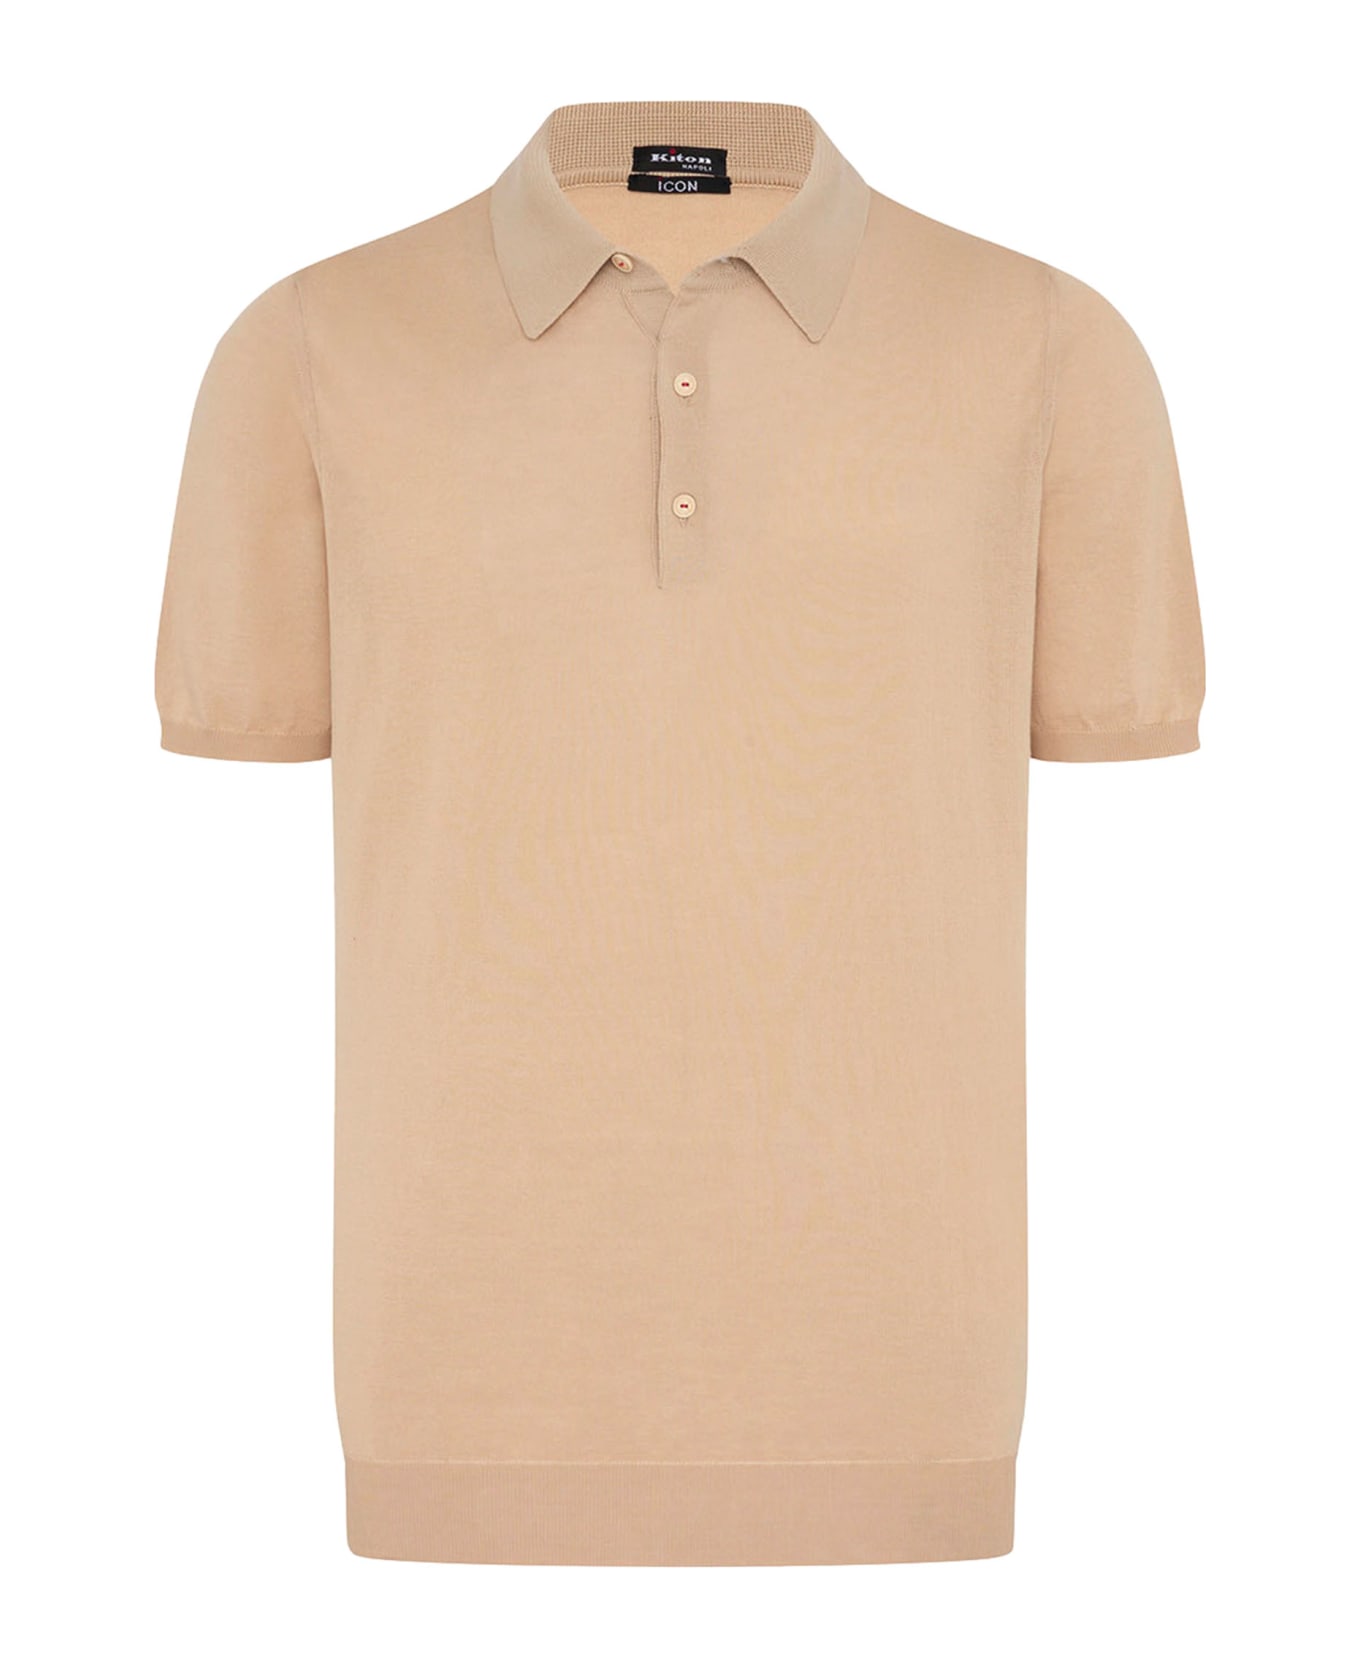 Kiton Polo Shirt Cotton - NATURAL BEIGE